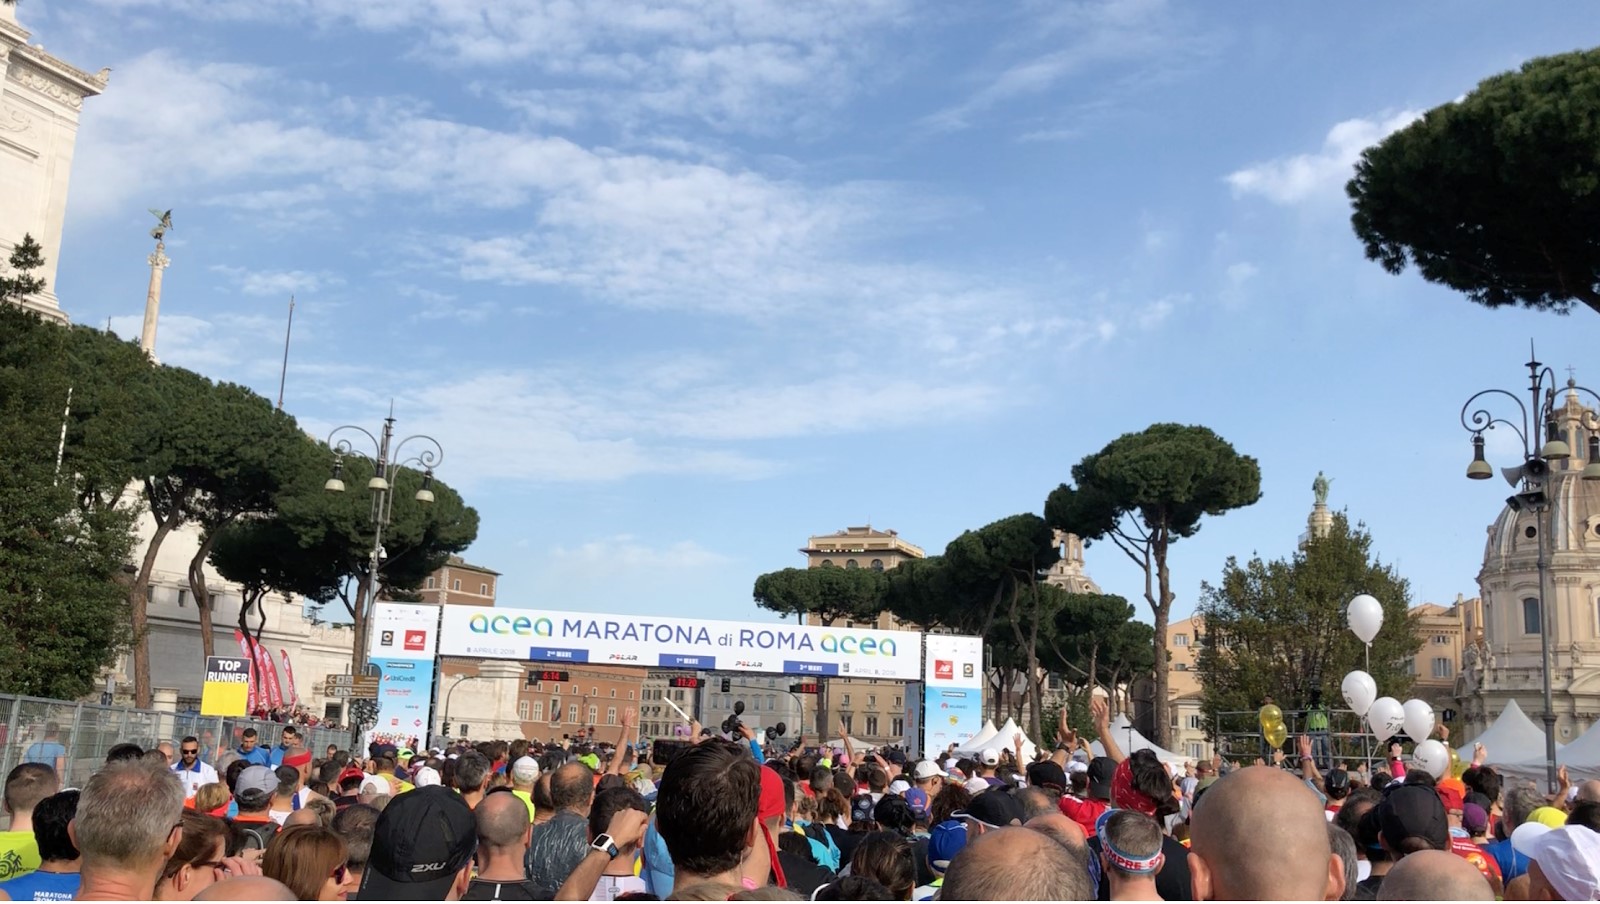 [Хабра-оффтоп] Maratona di Roma, или первый марафон для ИТ-шника - 16